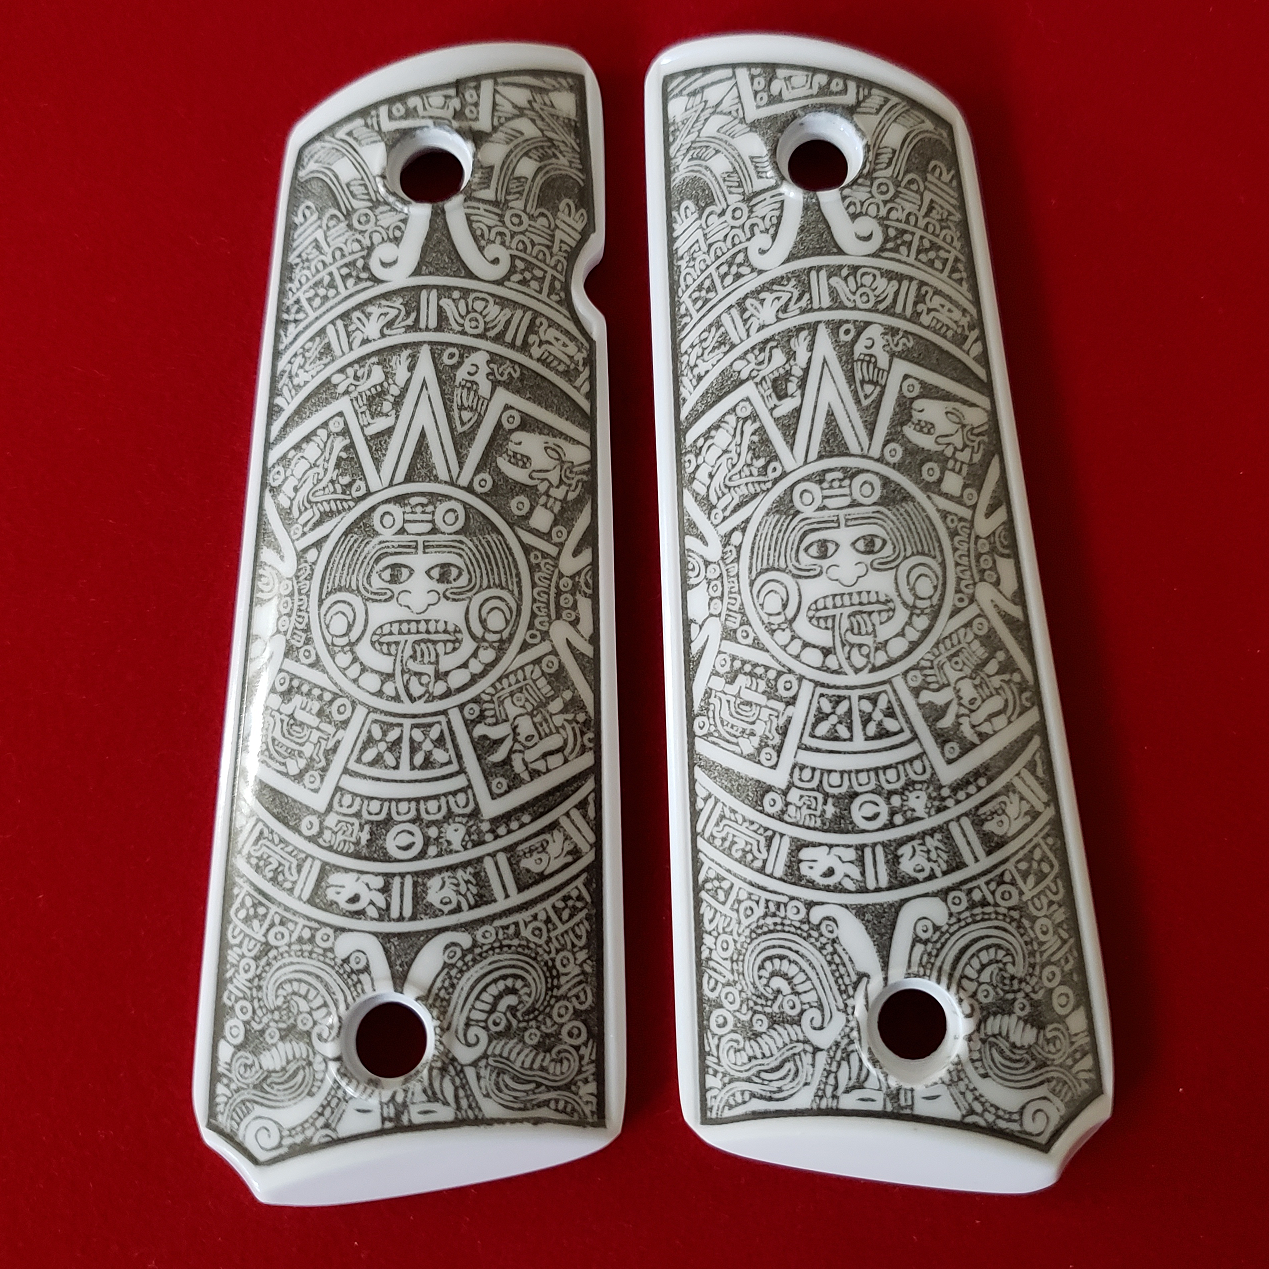 1911 Full Size Aztec Calendar Ivory Grips with Ambi Cut [I07]